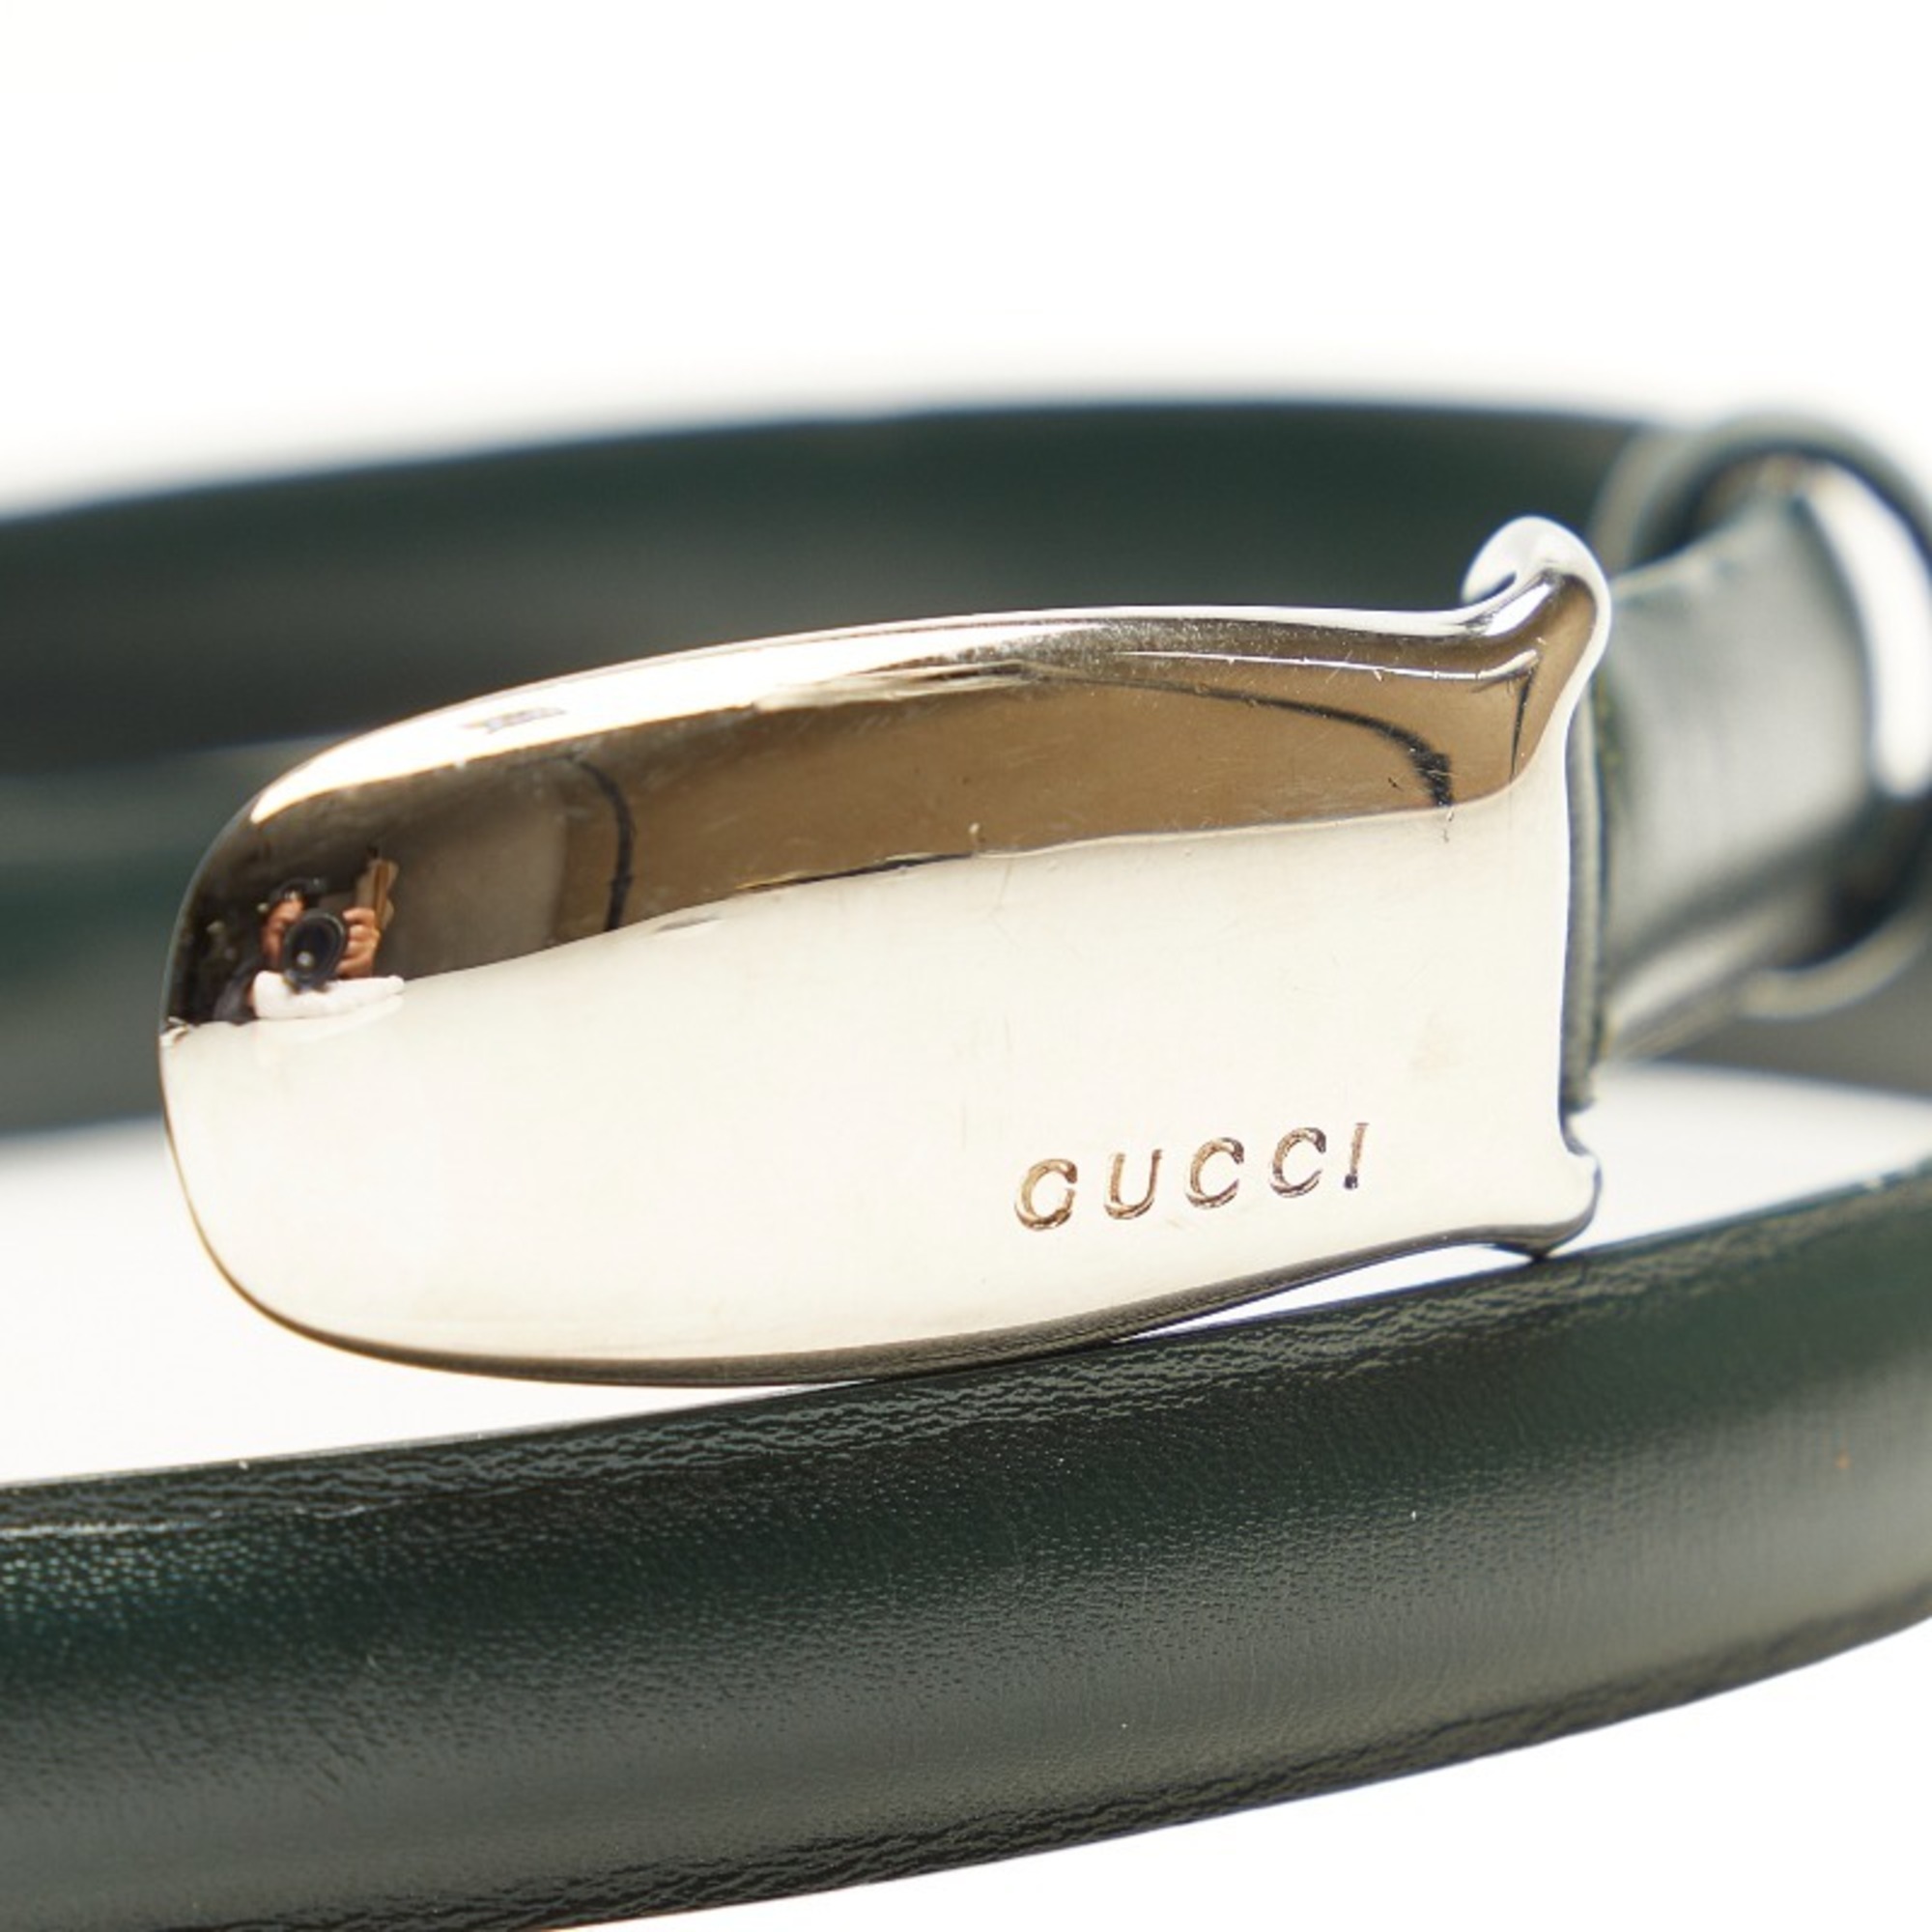 Gucci belt 036 0959 1115 green leather ladies GUCCI